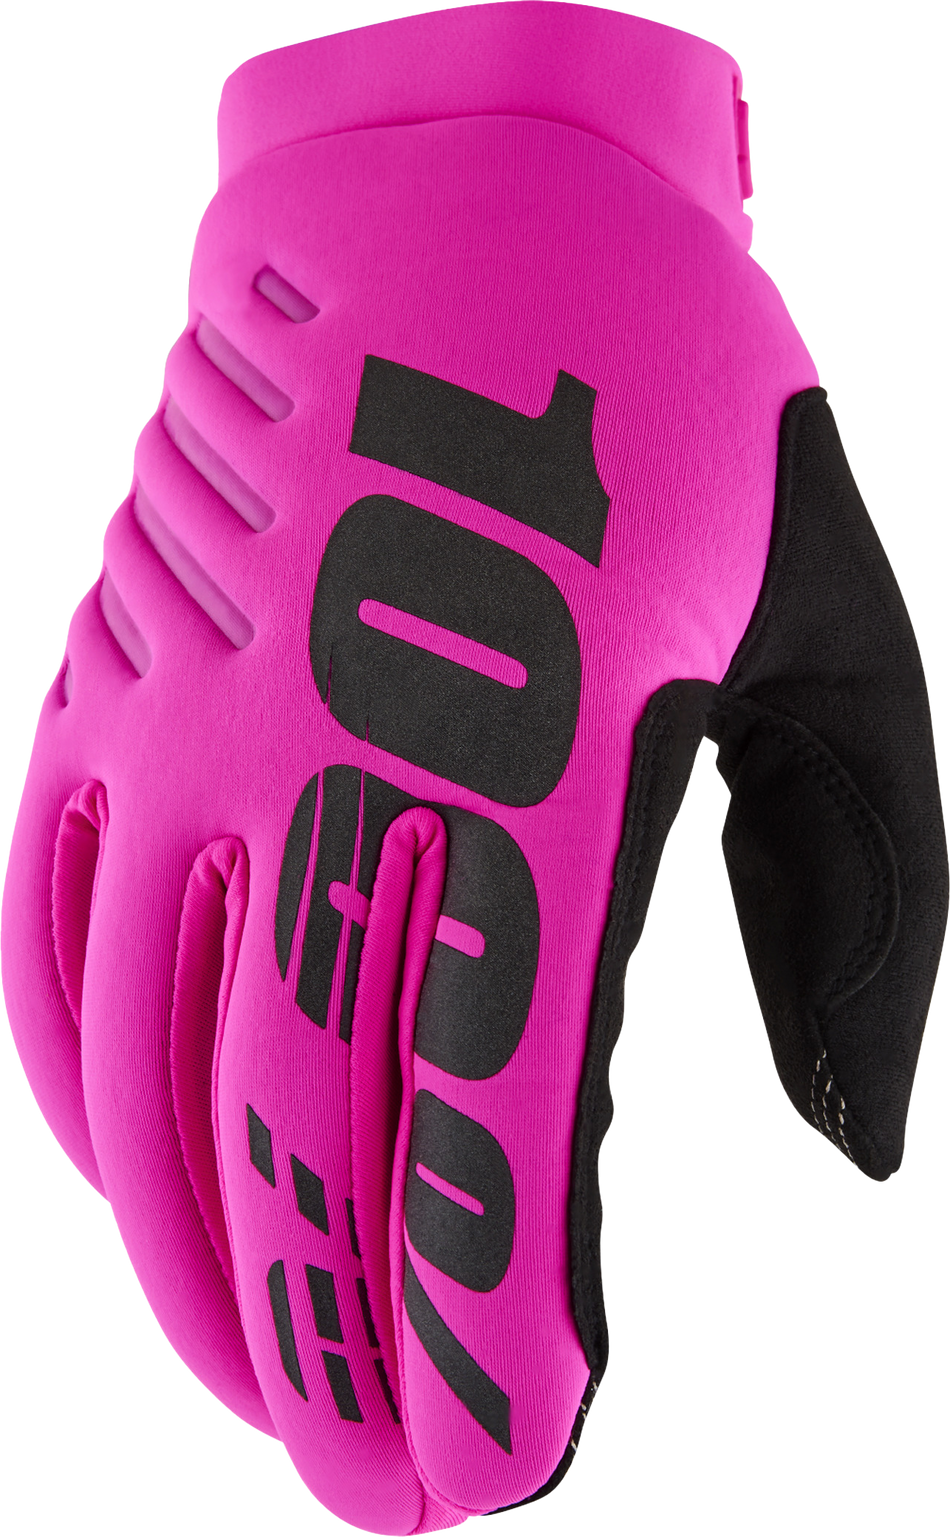 100% Brisker Women's Gloves Neon Pink/Black Md 10005-00007